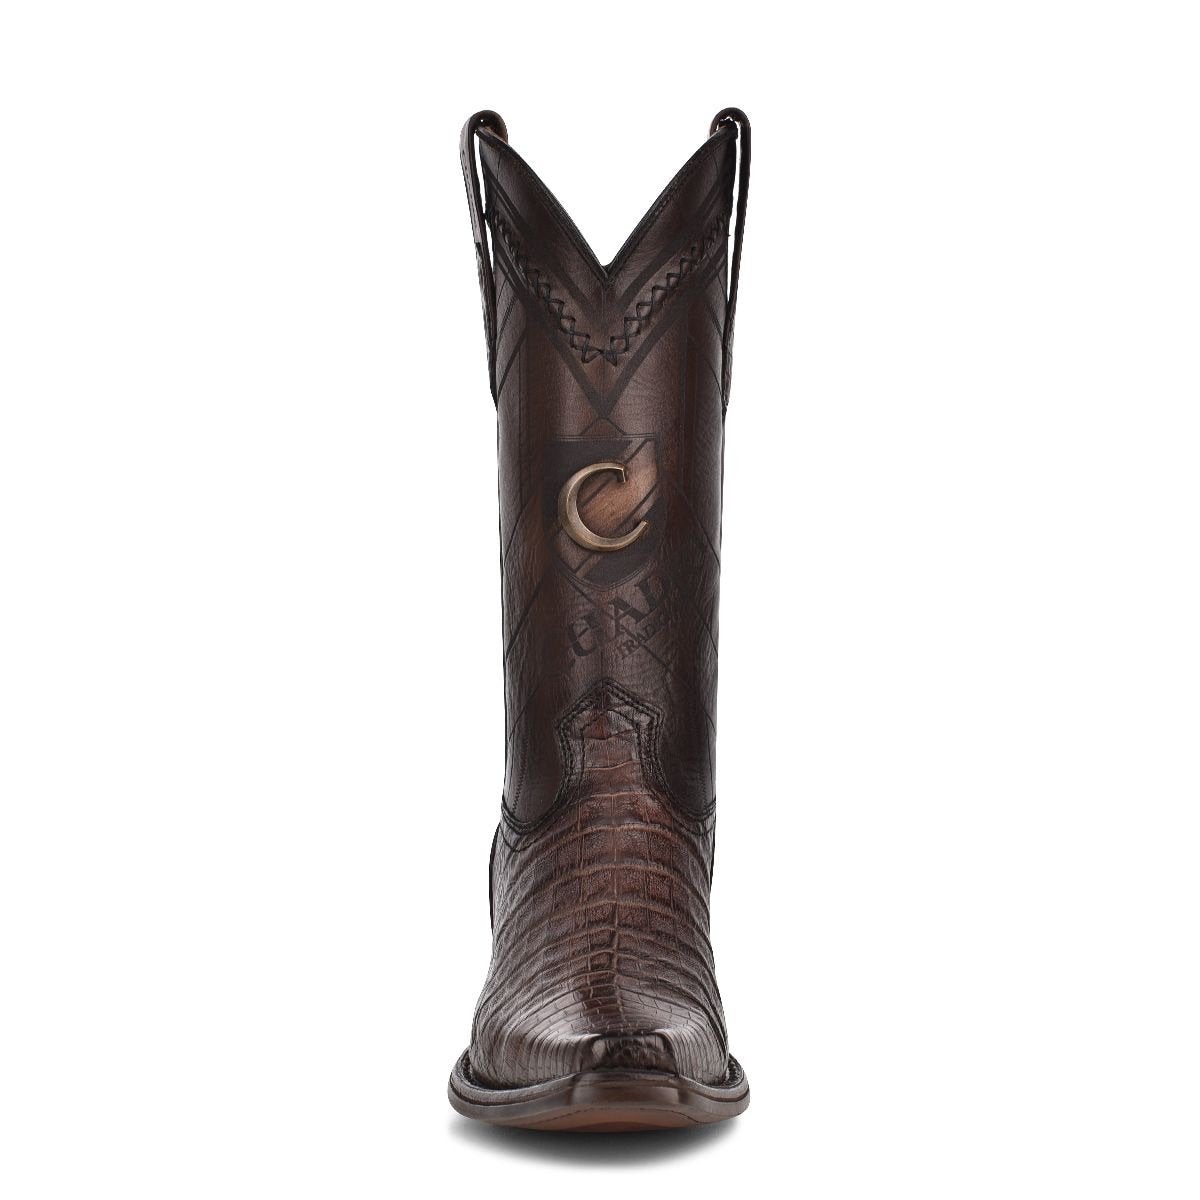 1B2FFY - Cuadra brown dress cowboy caiman leather boots for men